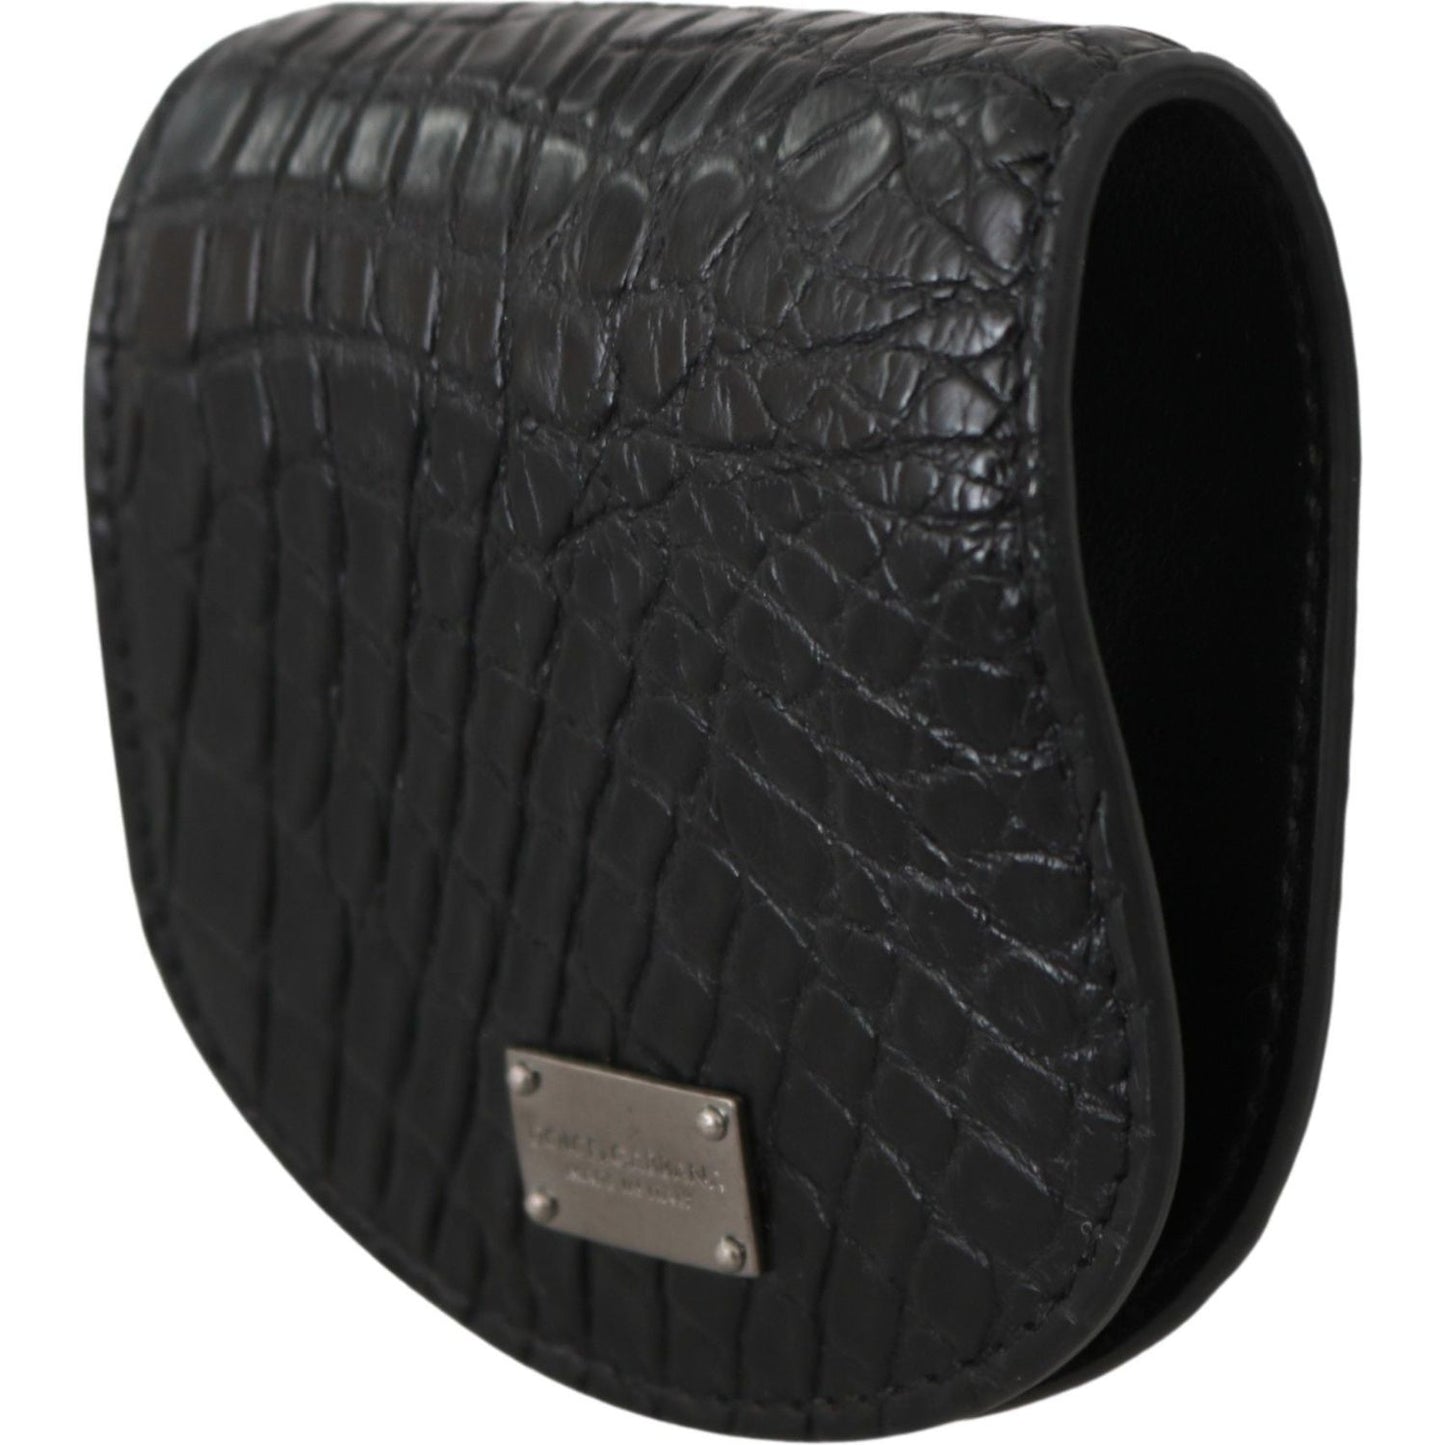 Dolce & Gabbana Sleek Black Leather Coin Case Wallet black-exotic-skin-pocket-condom-case-holder Condom Case IMG_0230-2dd0314c-3ec.jpg